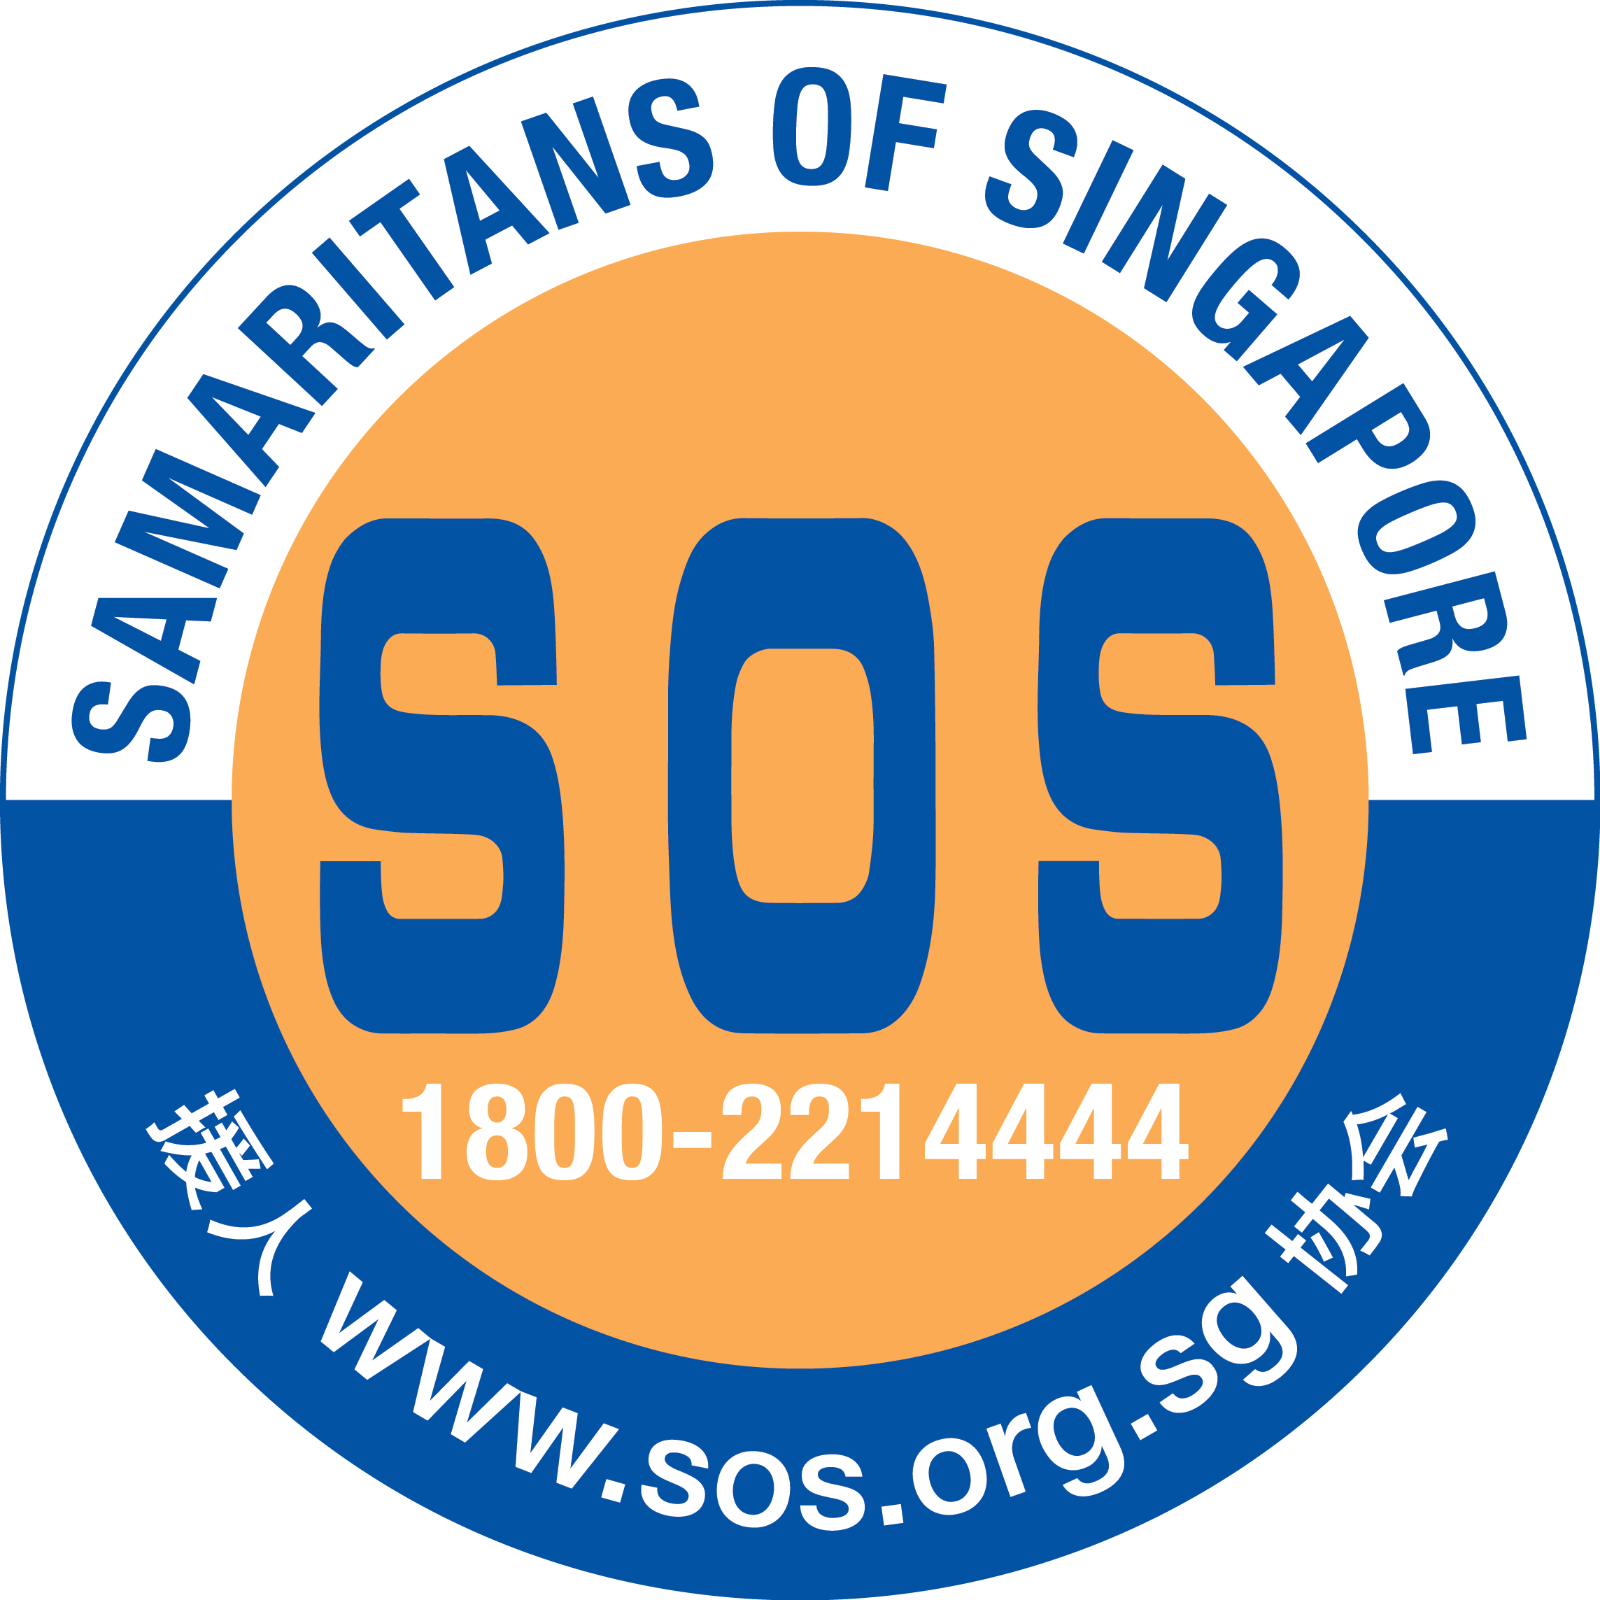 S.O.S. (Samaritans Of Singapore)